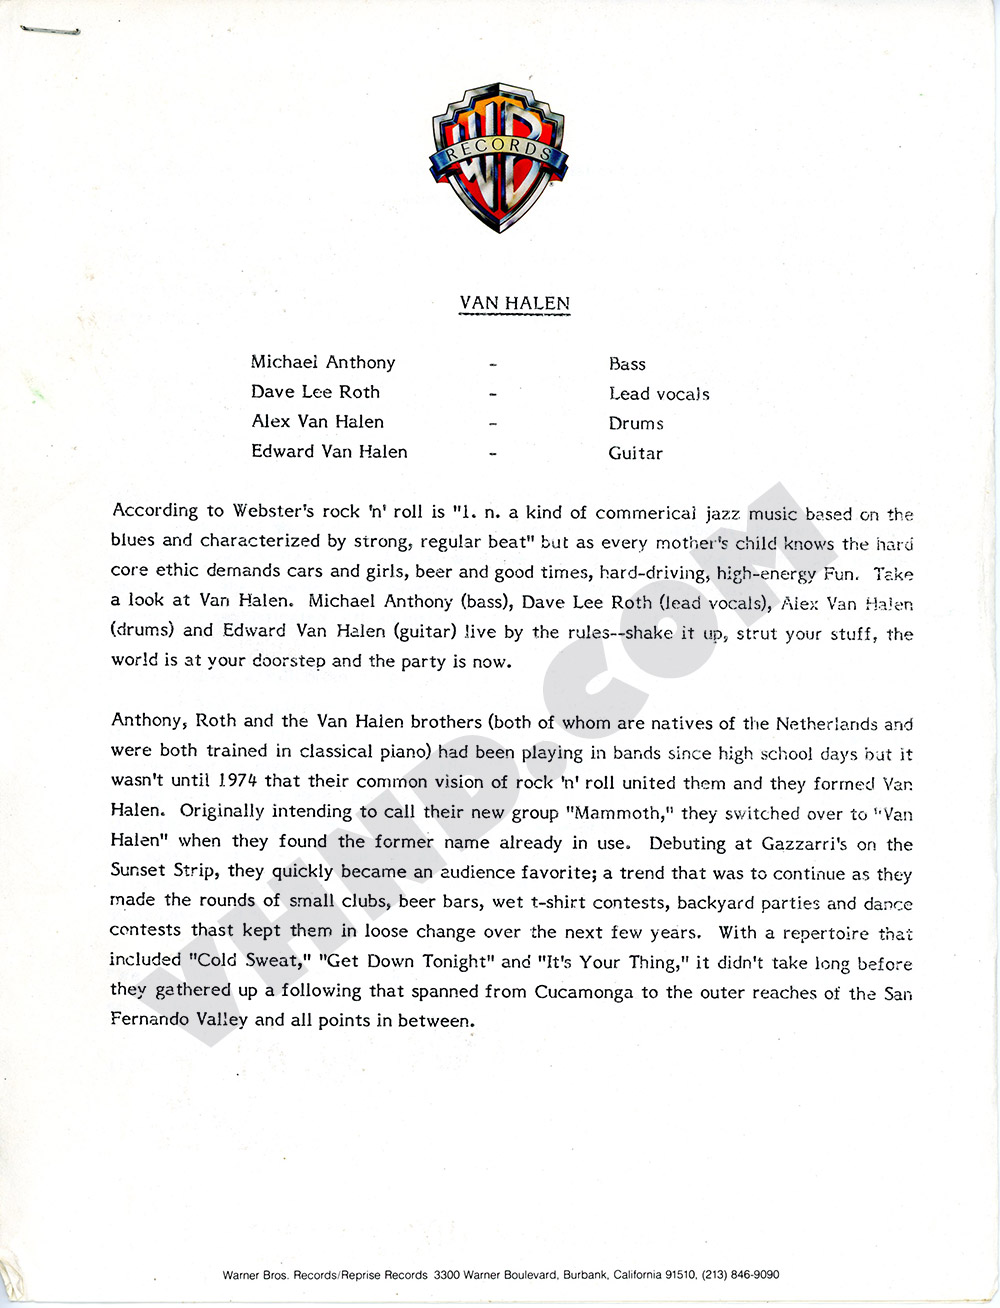 1978 Warner Bros. Bio Page for Van Halen's Debut Album Press Kit